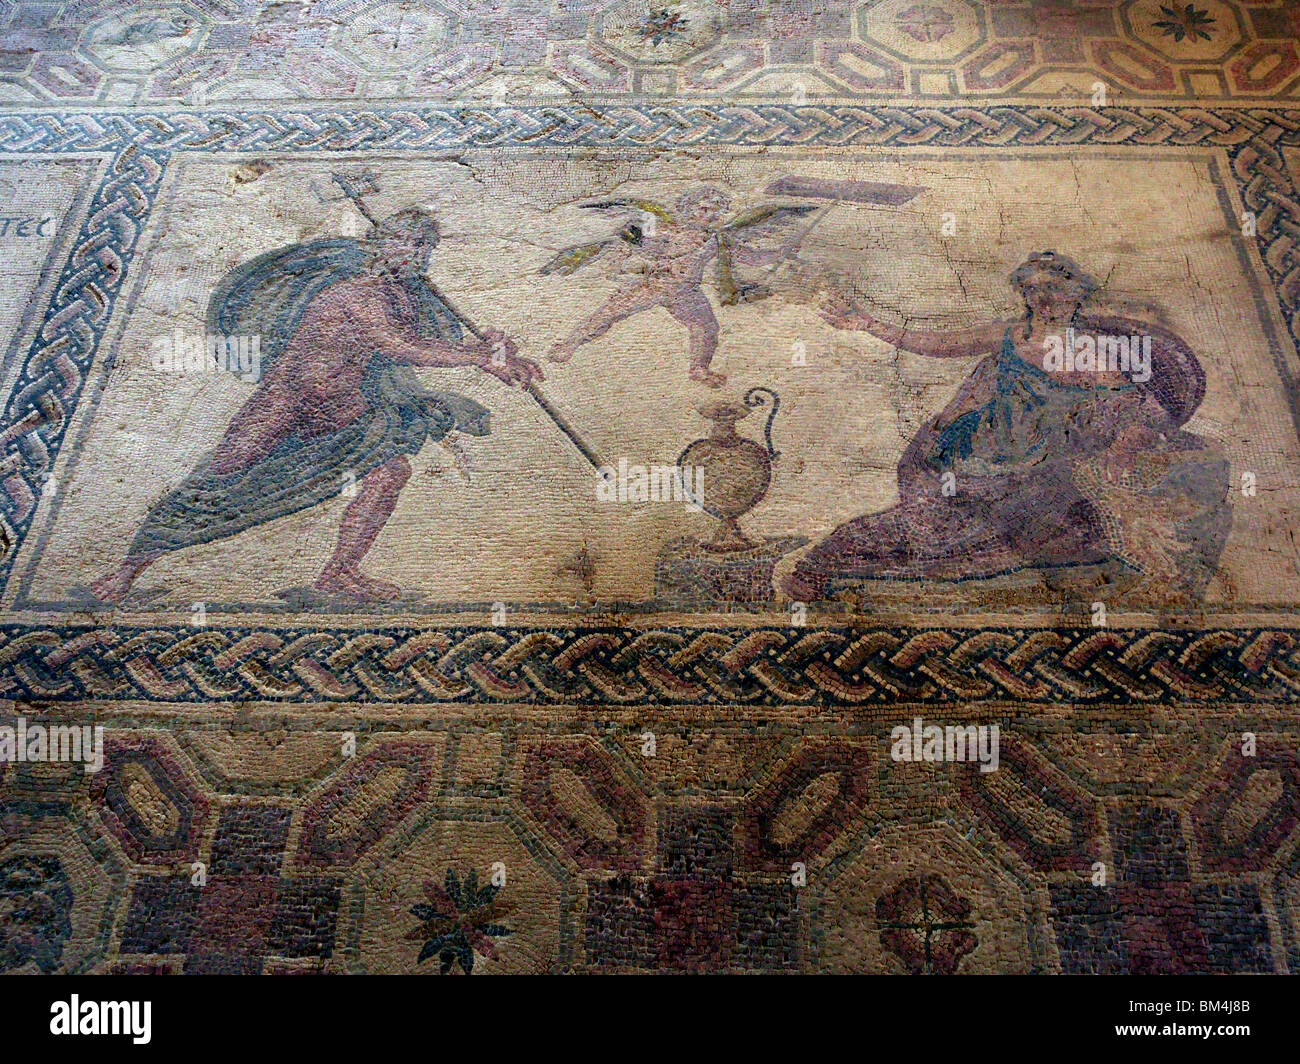 Roman mosaics at Paphos in Cyprus. Stock Photo